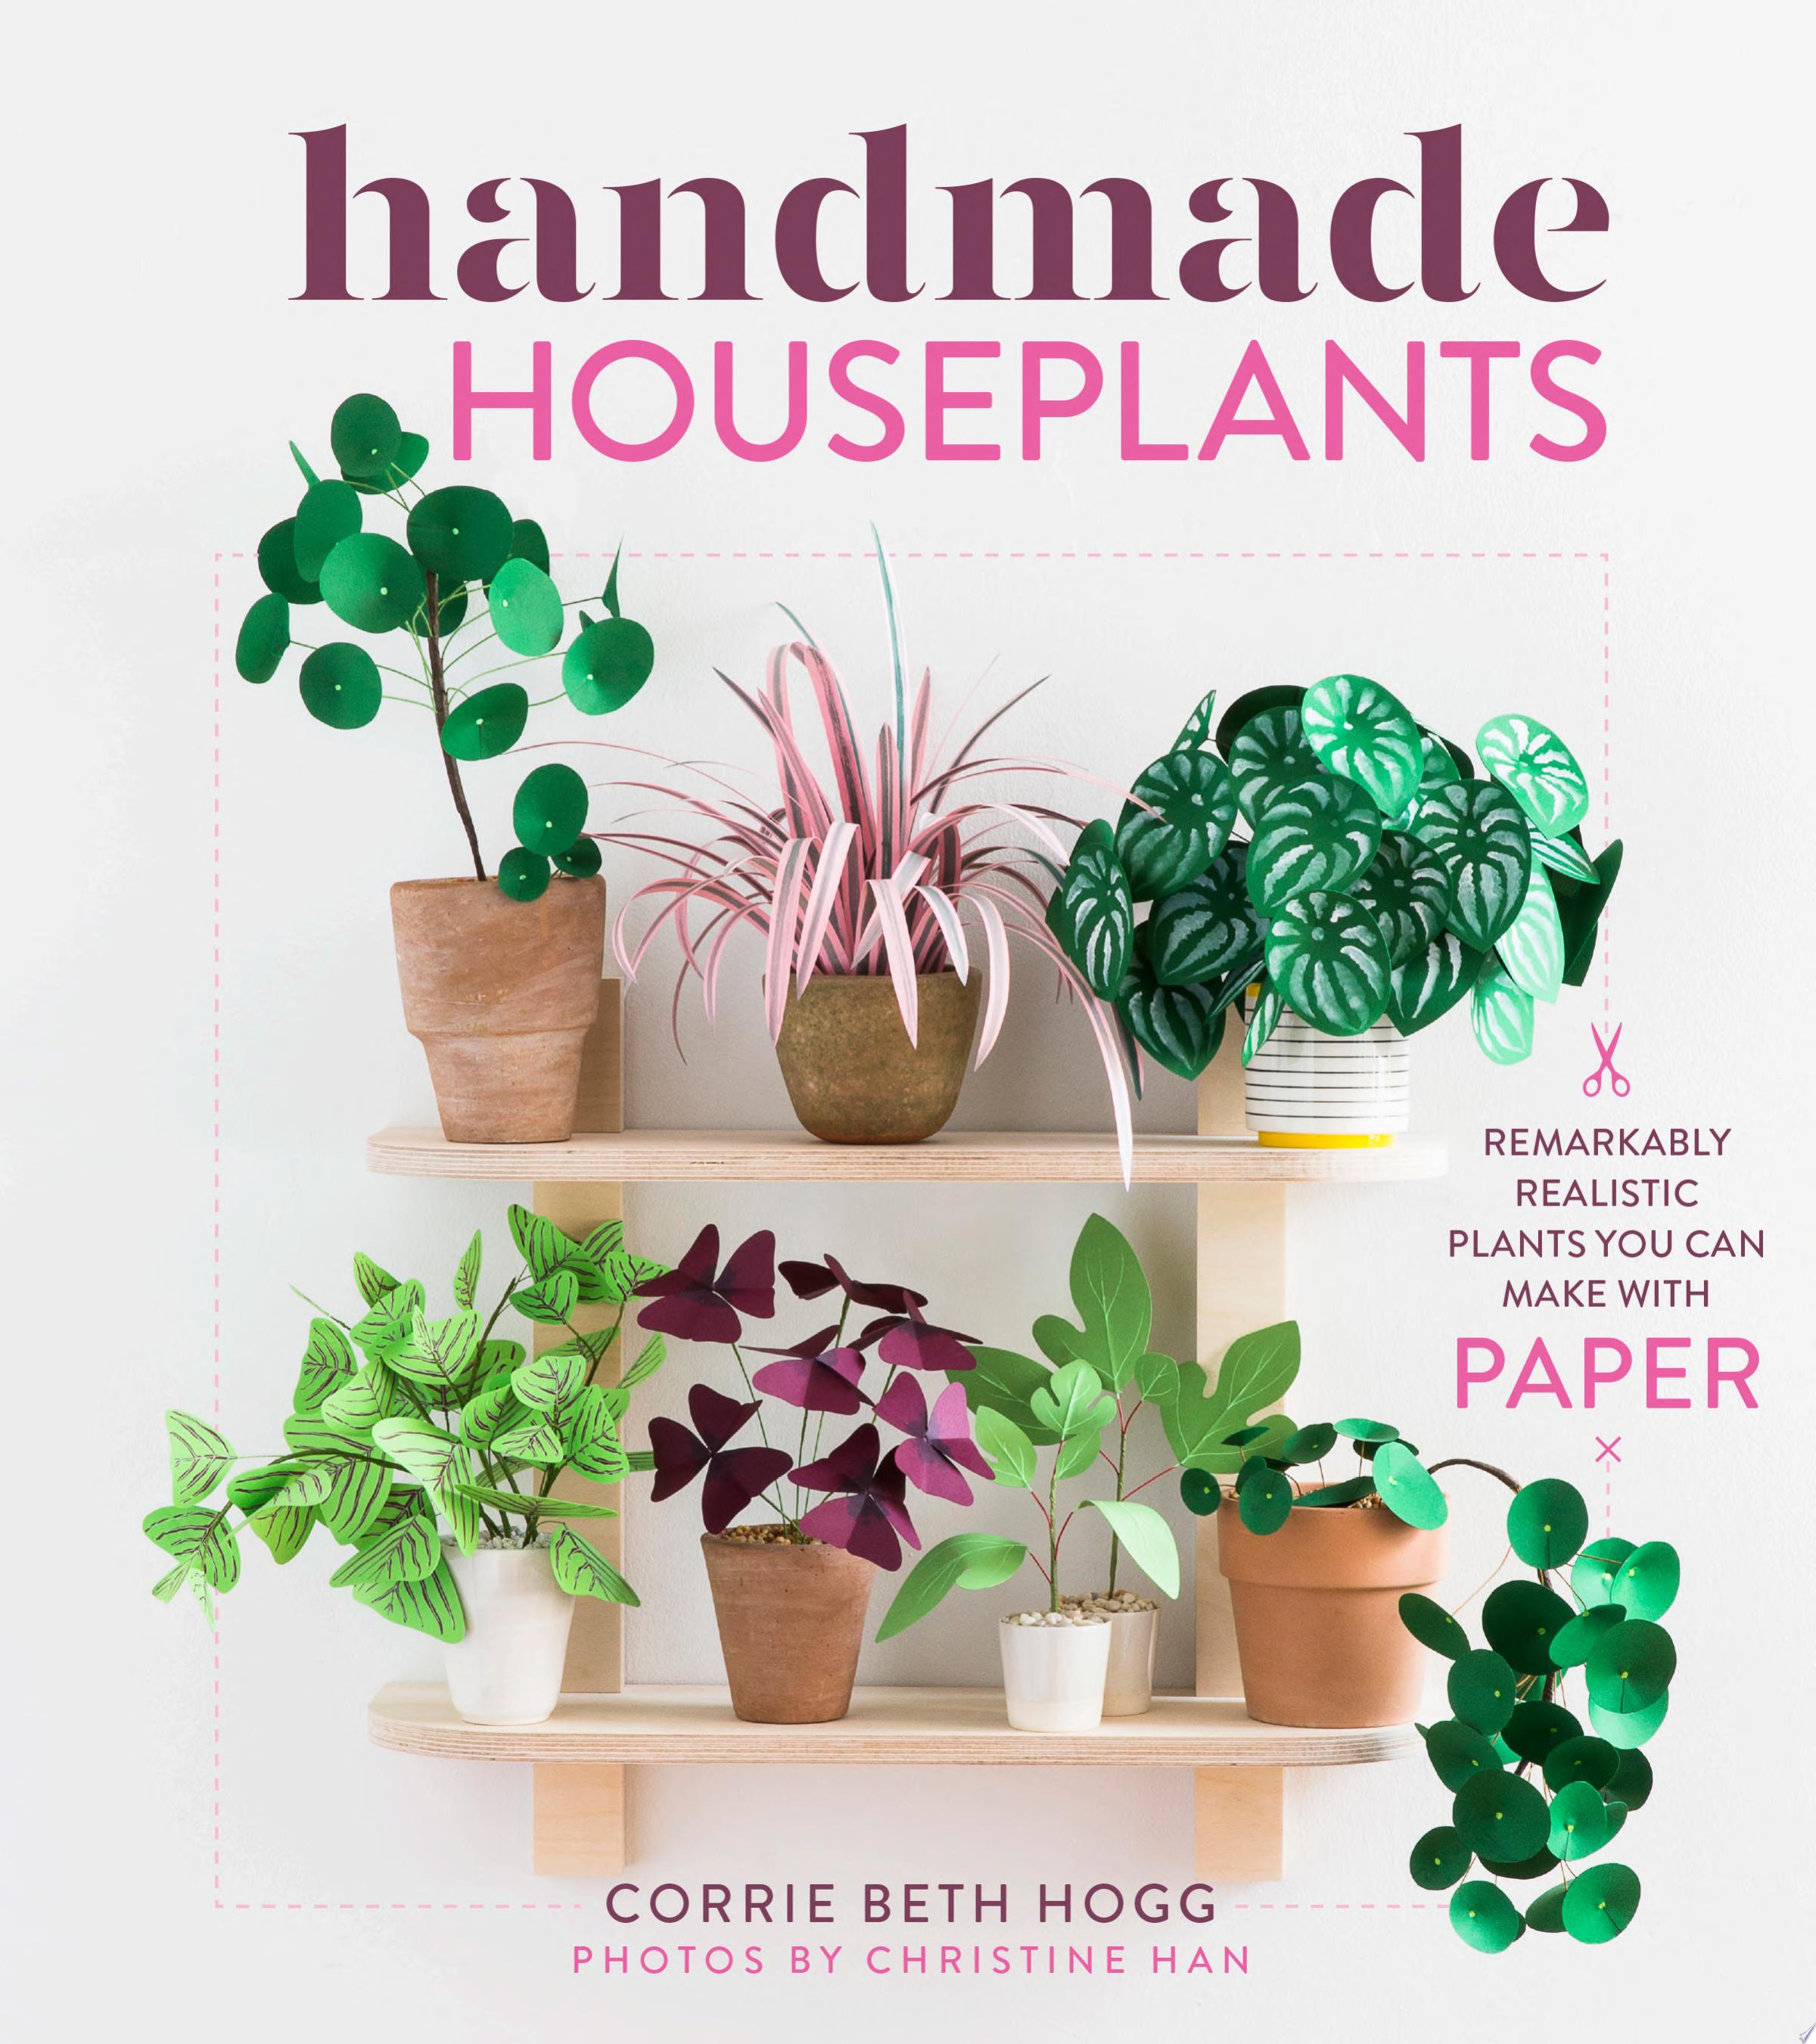 Image for "Handmade Houseplants"